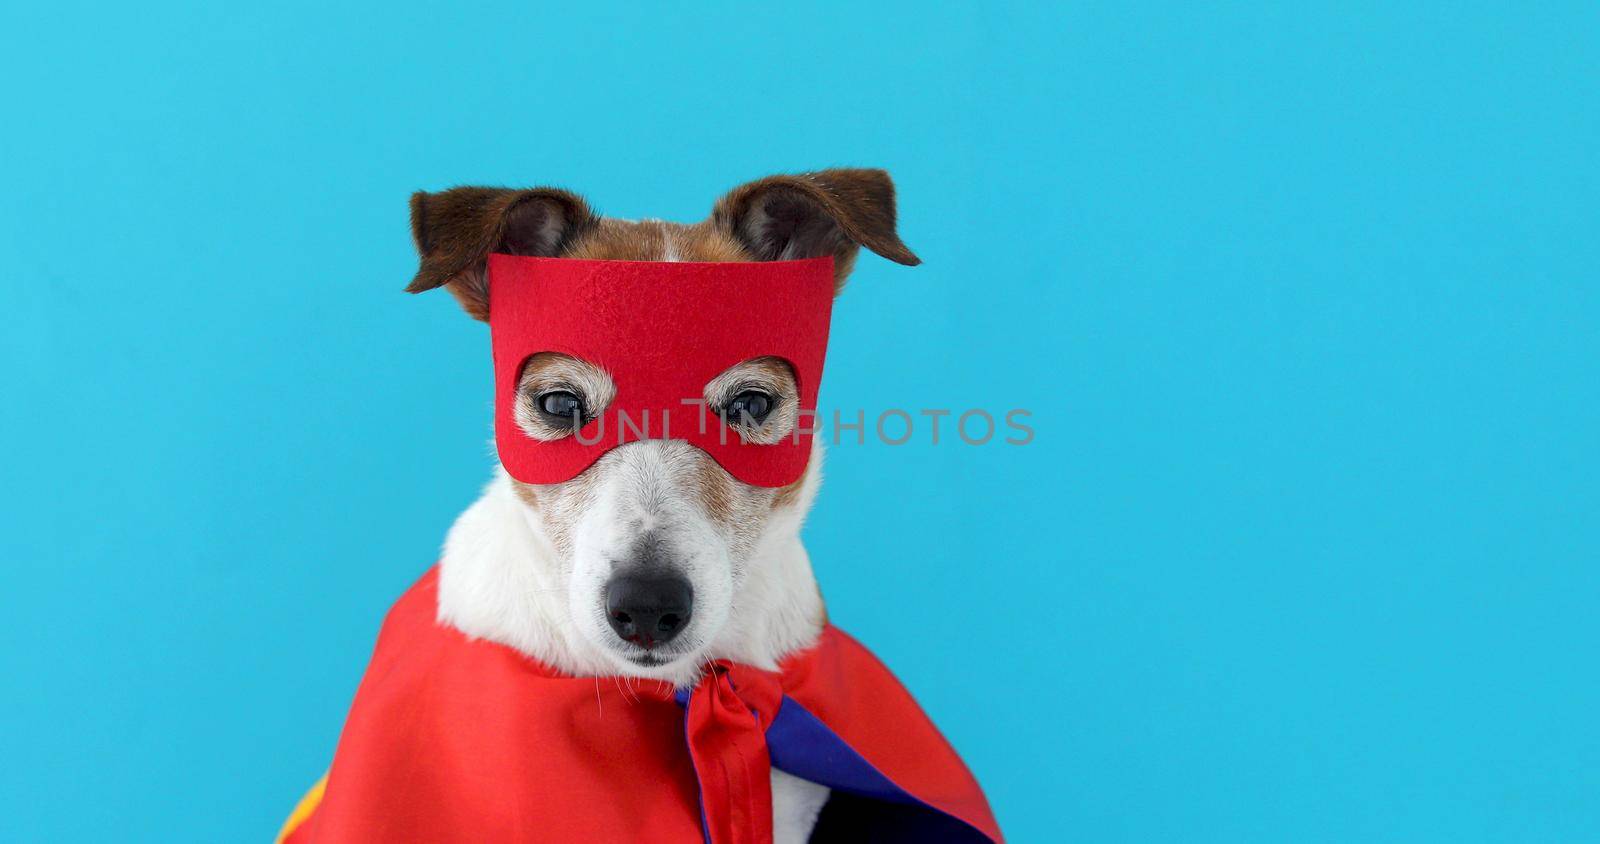 Dog jack russell super hero costume by Demkat